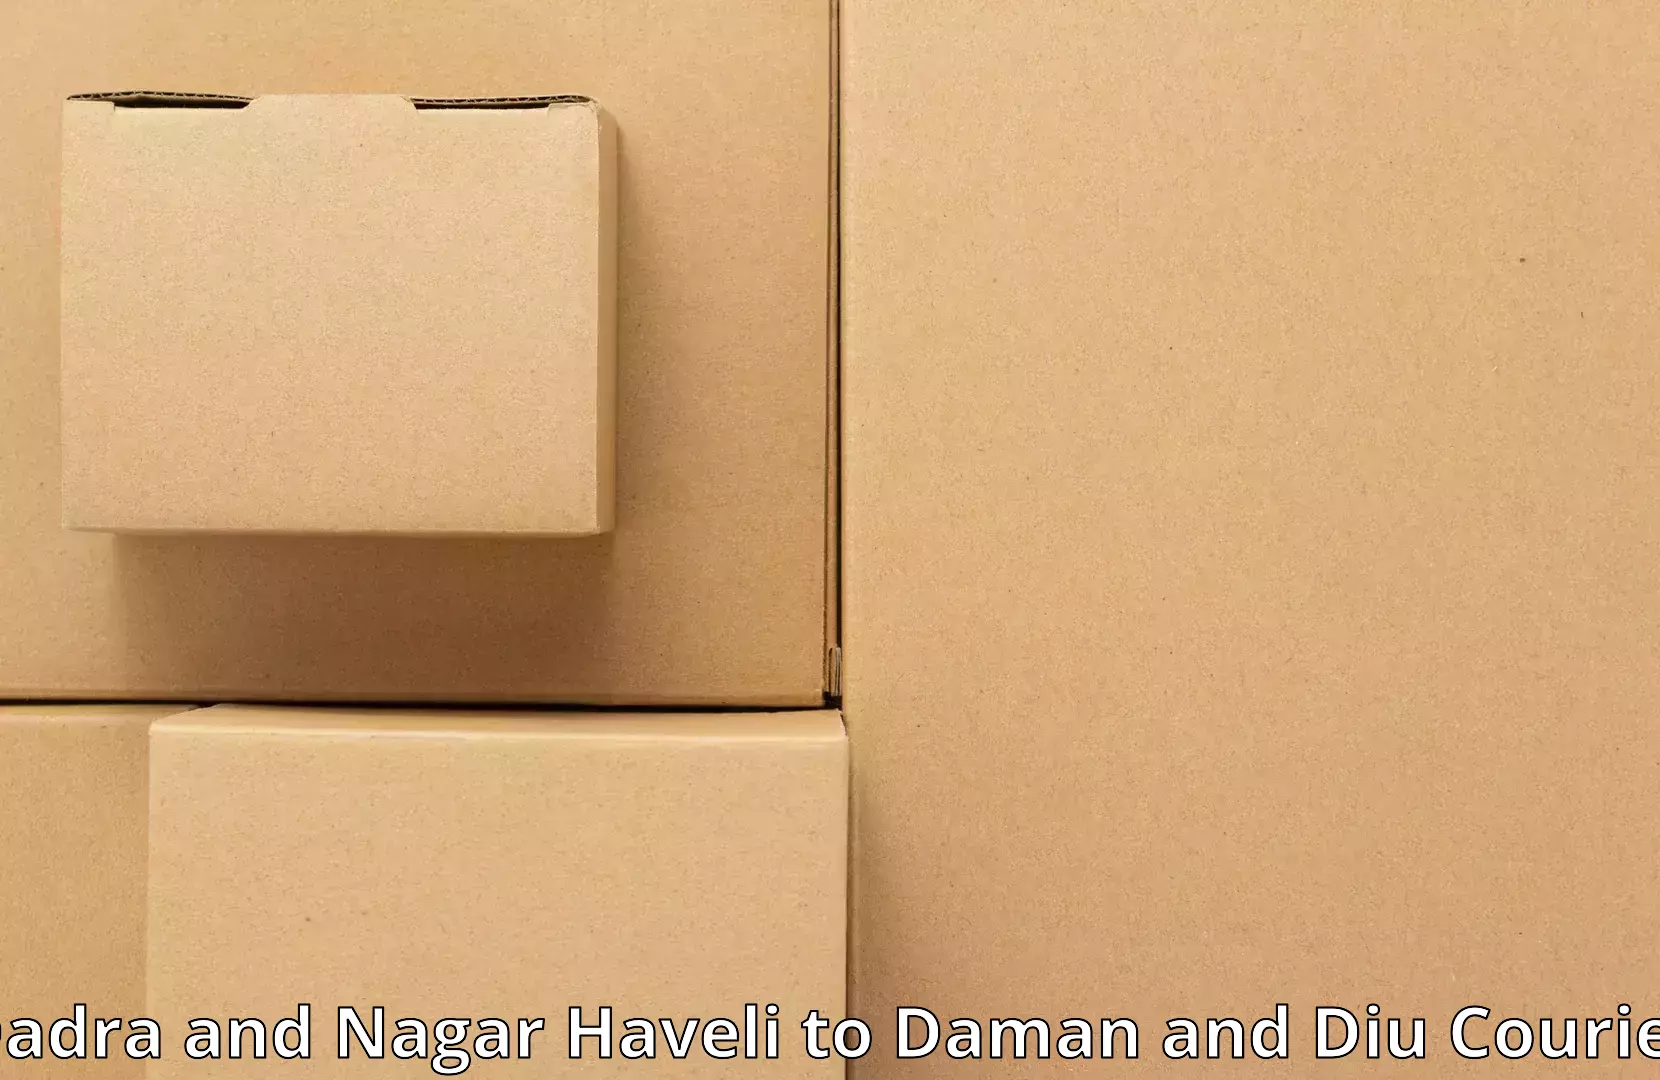 Professional moving company Dadra and Nagar Haveli to Daman